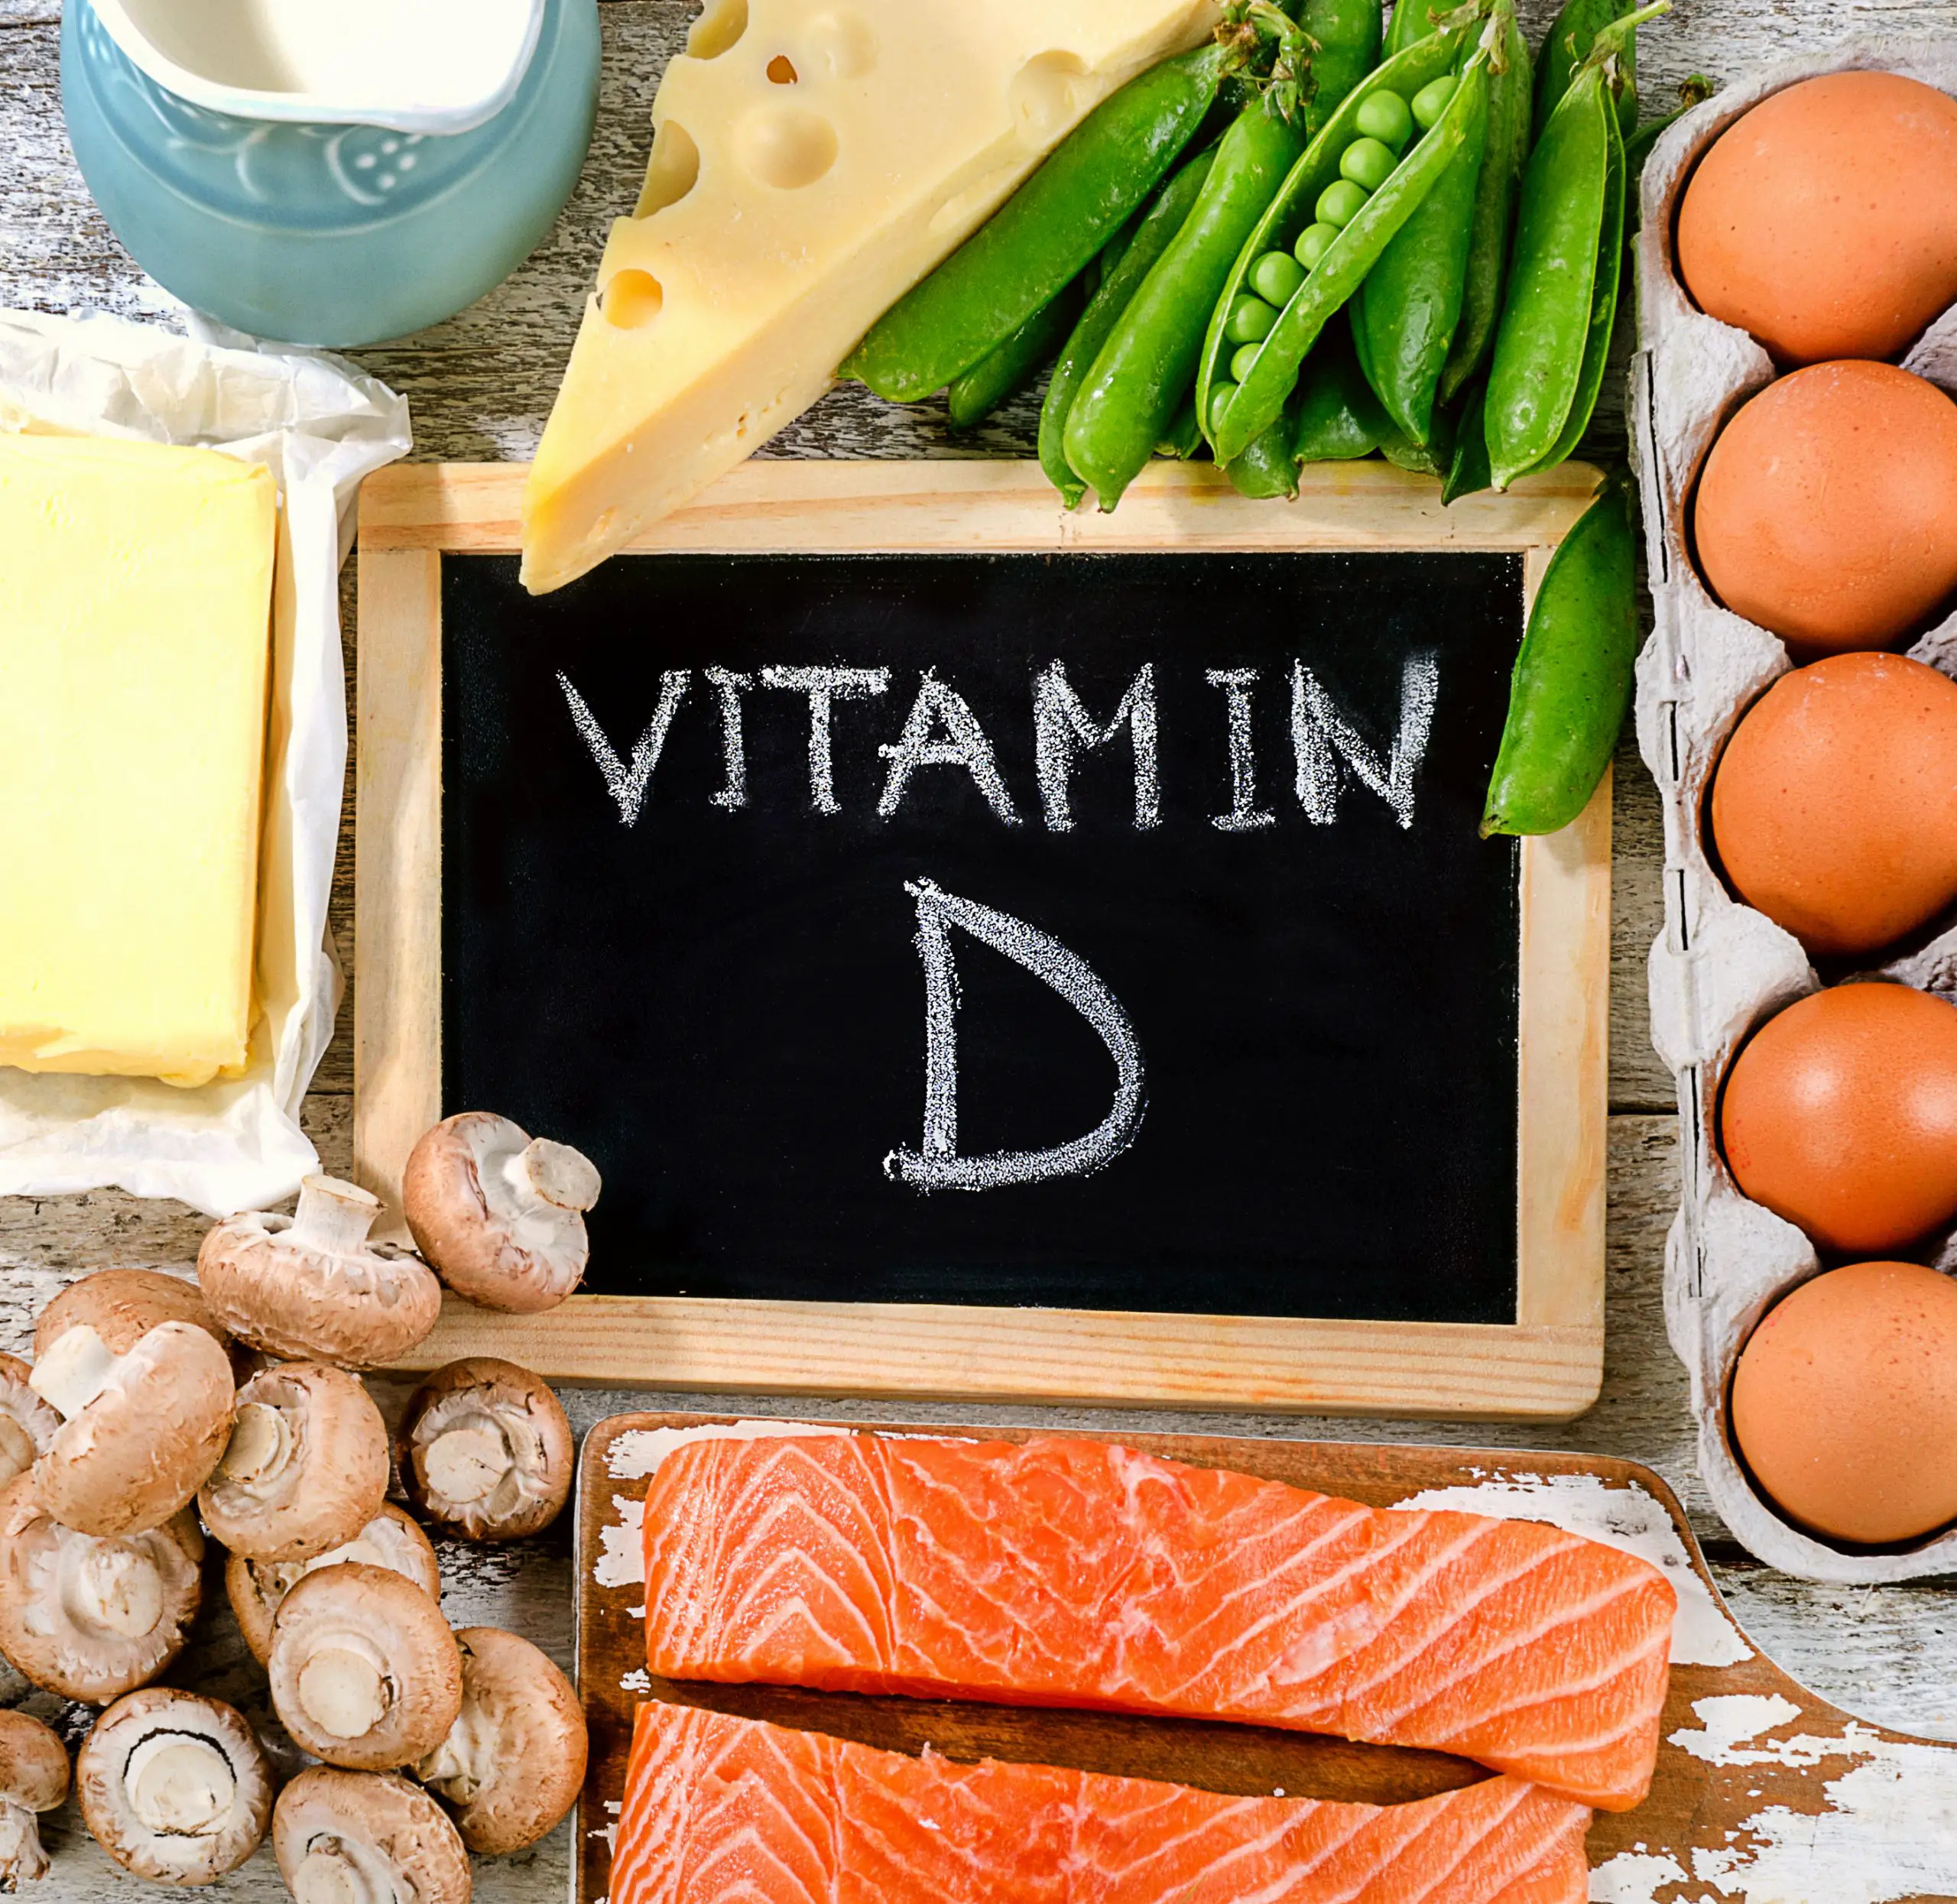 Natural Sources of Vitamin D